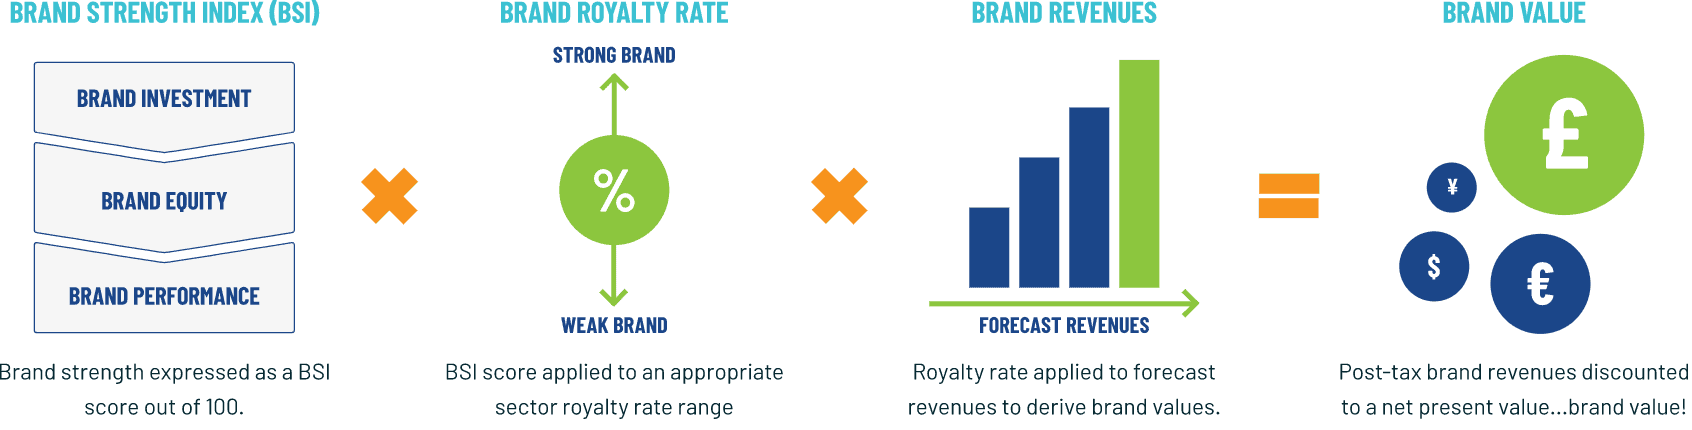 Royalty Relief Methodology - Brand Strength Index, Brand Royalty Rate ,Brand Revenue and Brand Value